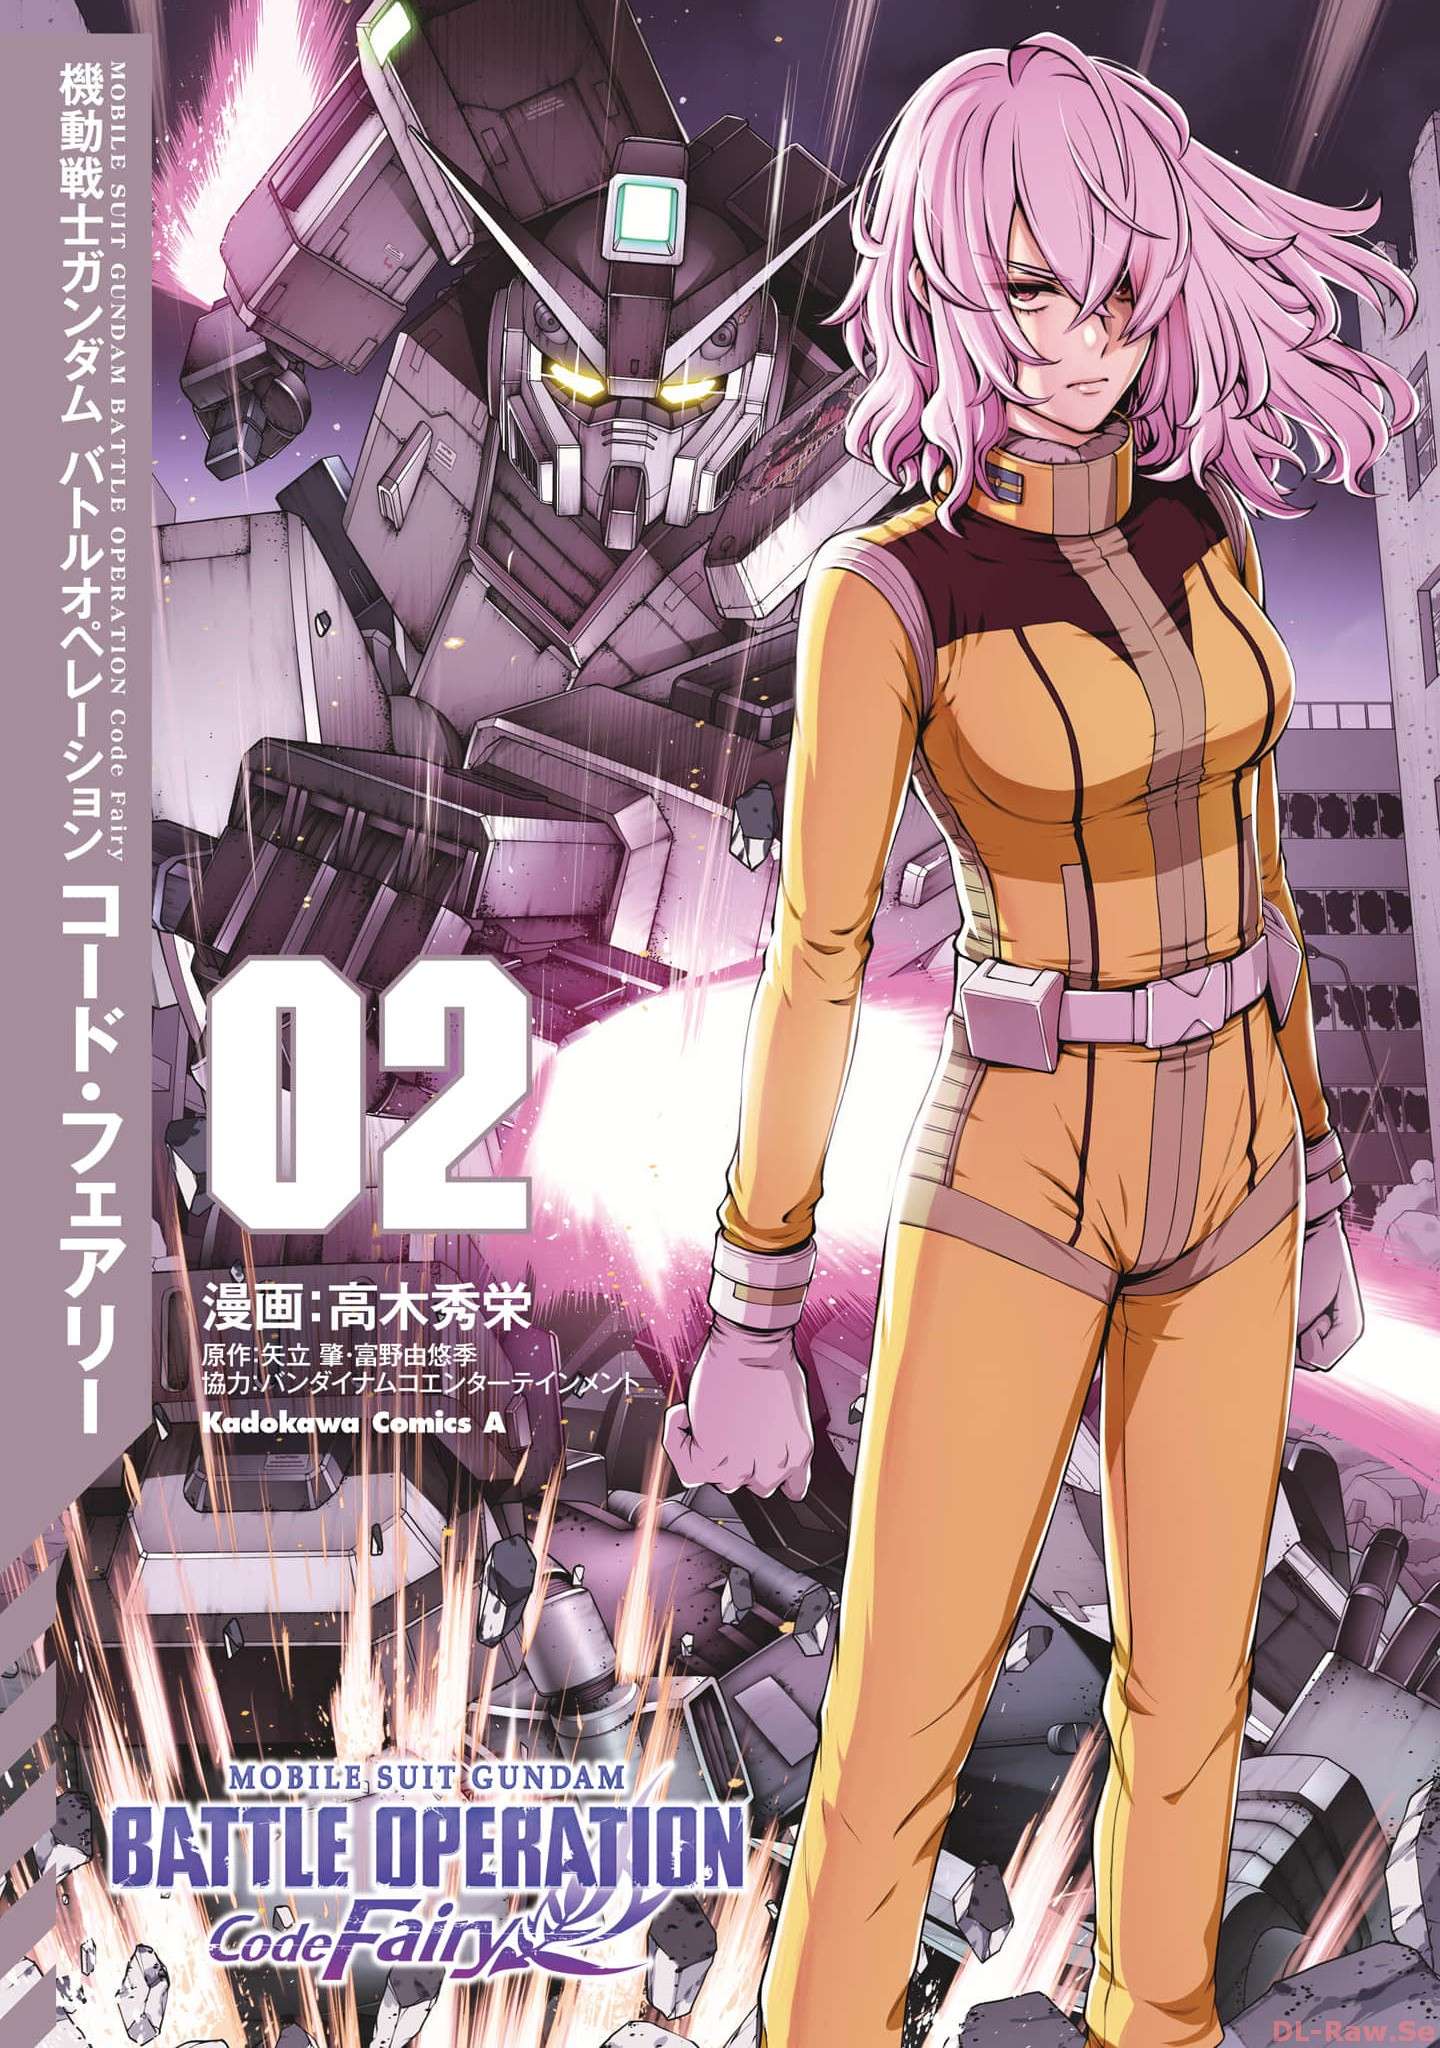 Mobile Suit Gundam: Battle Operation Code Fairy - chapter 7 - #1